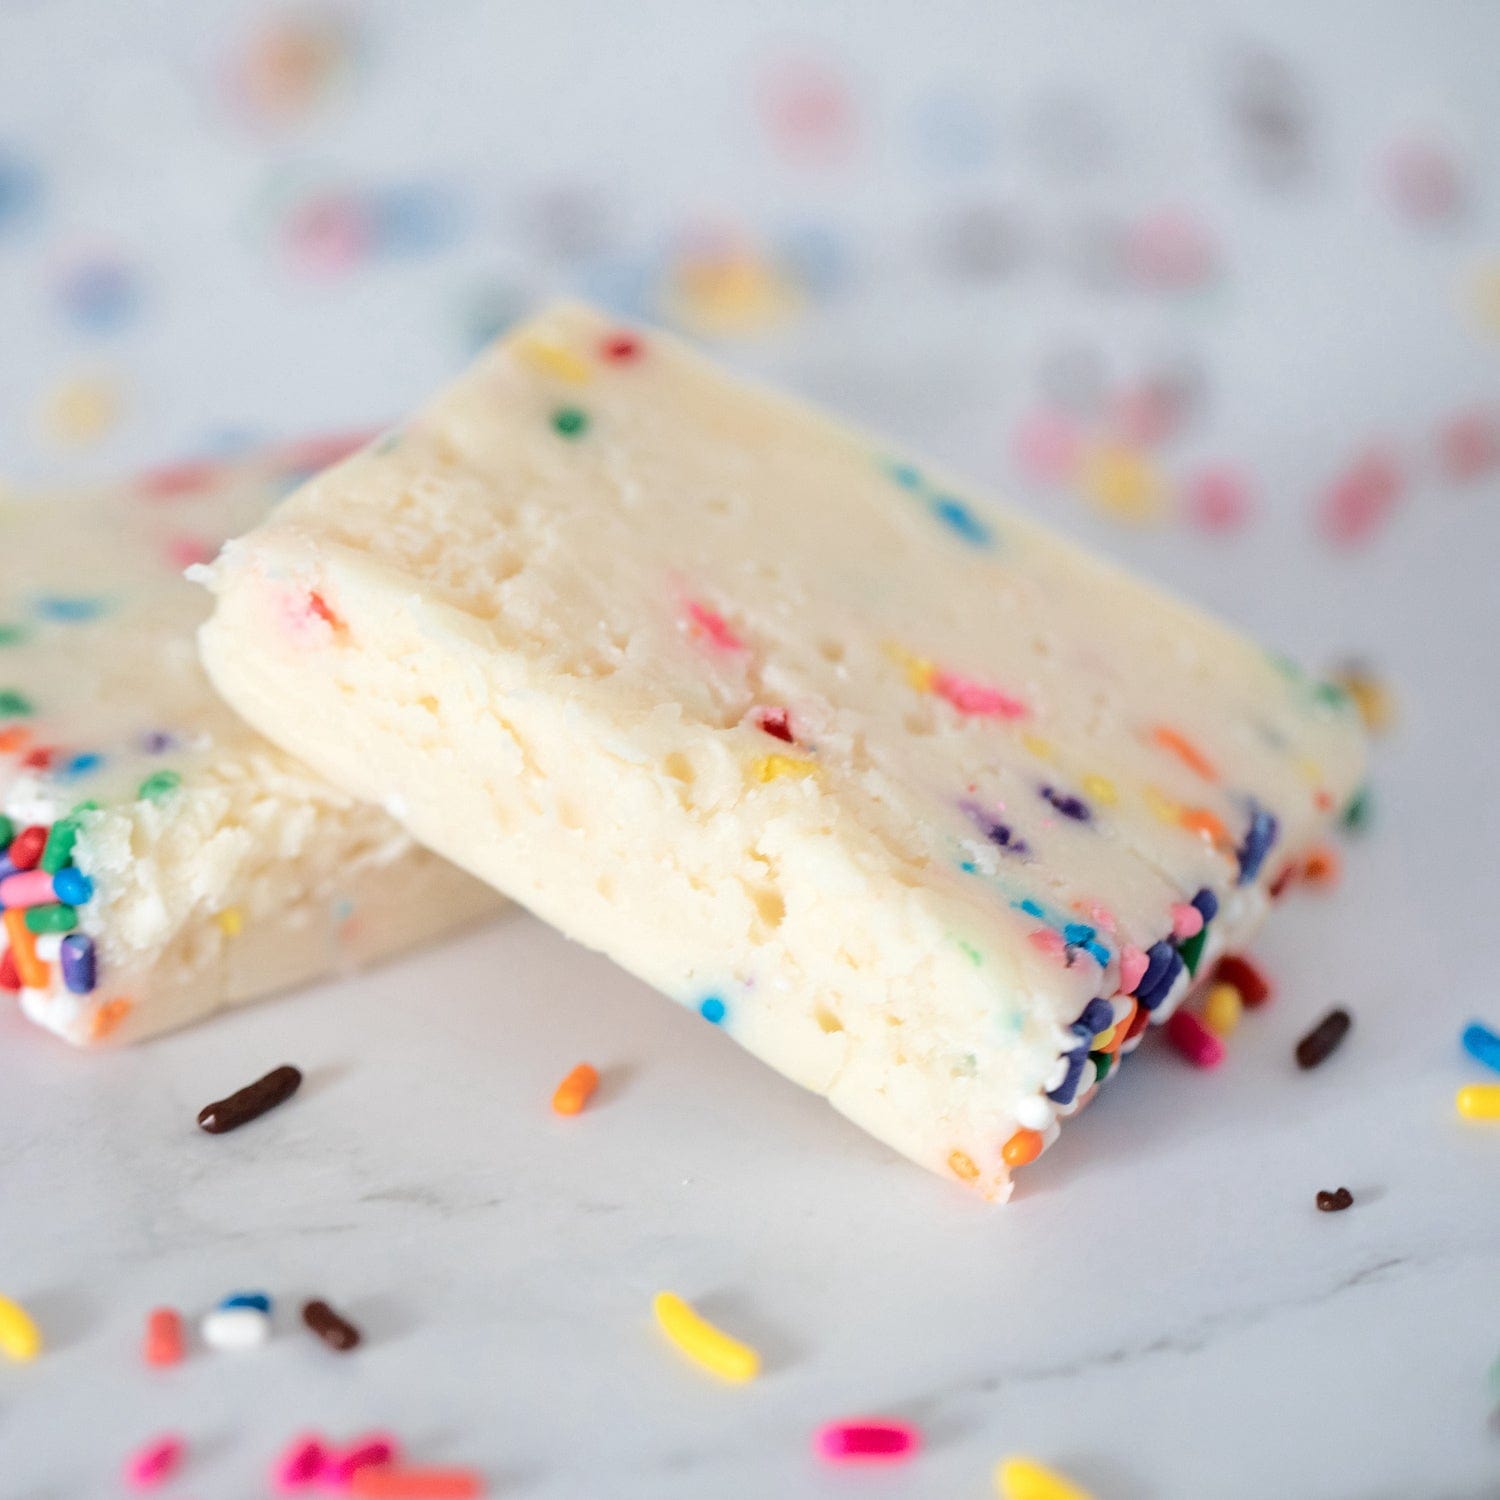 COOKIE DOUGH BIRTHDAY CAKE BITES – Candy World USA